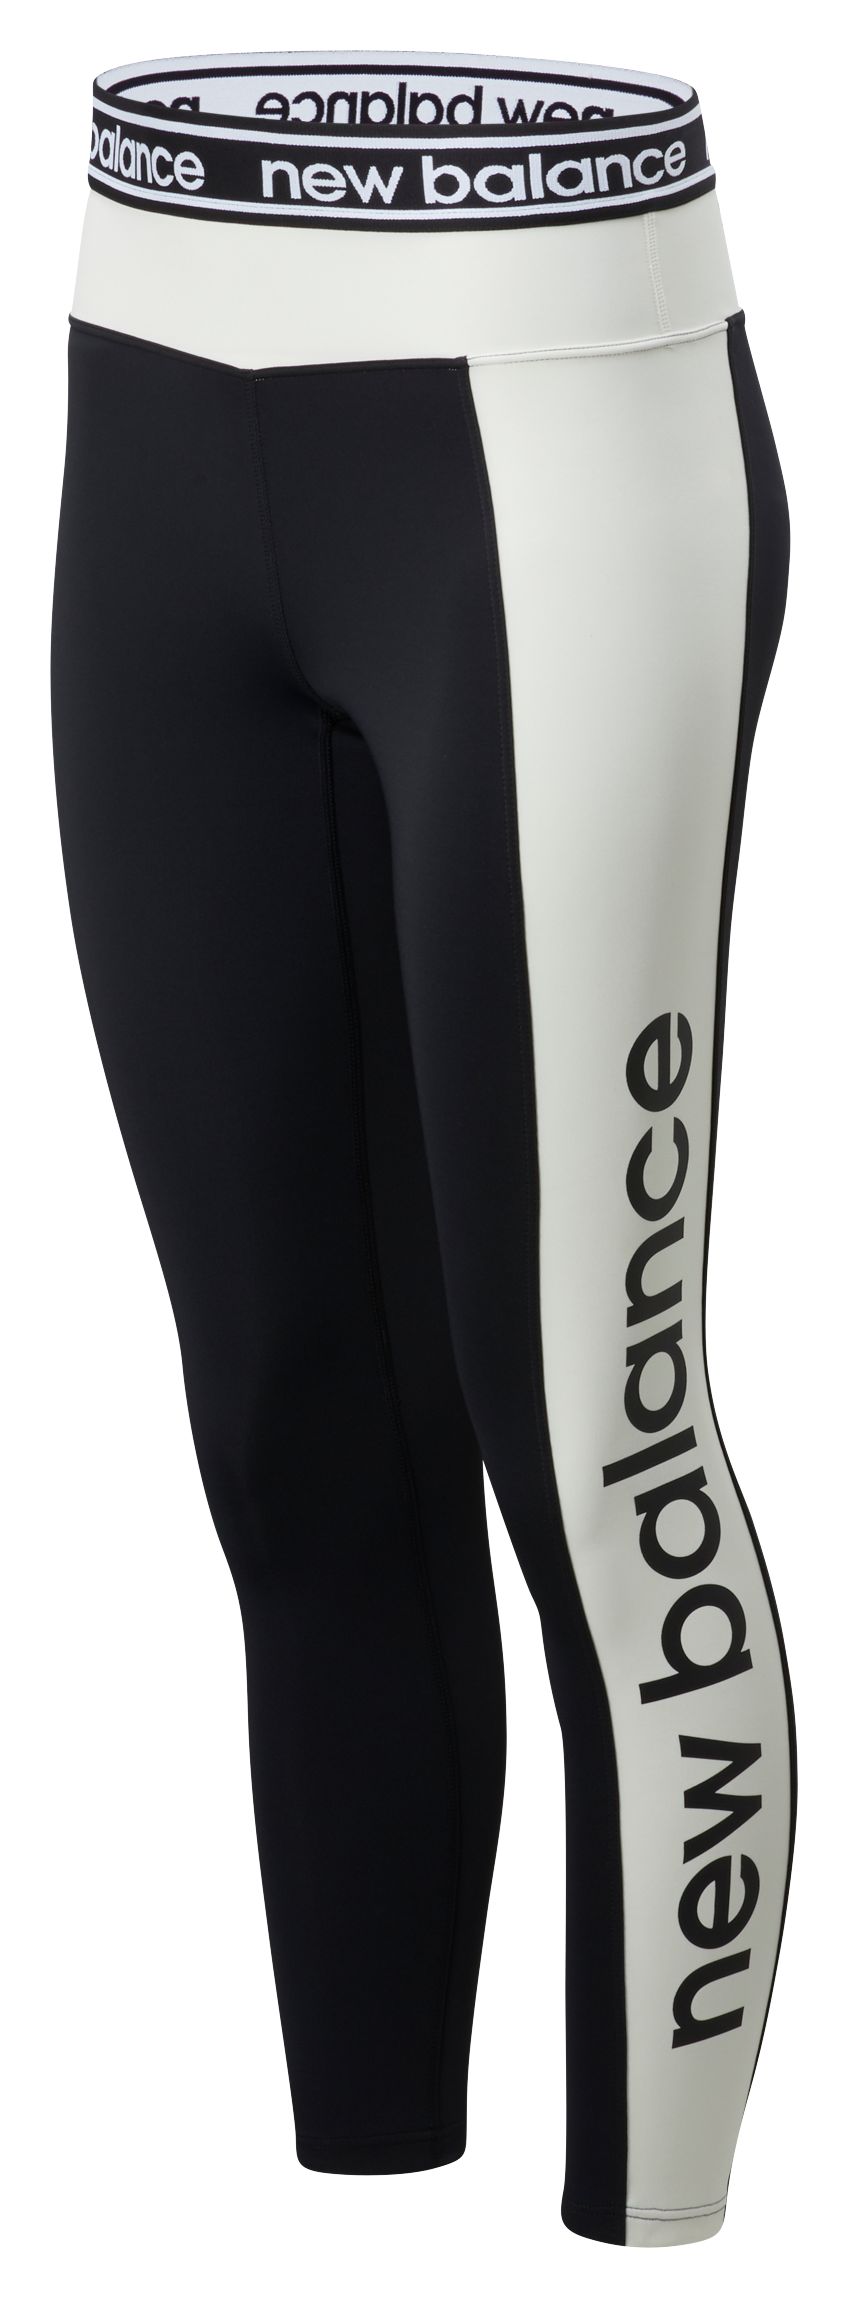 new balance b dry women's pants